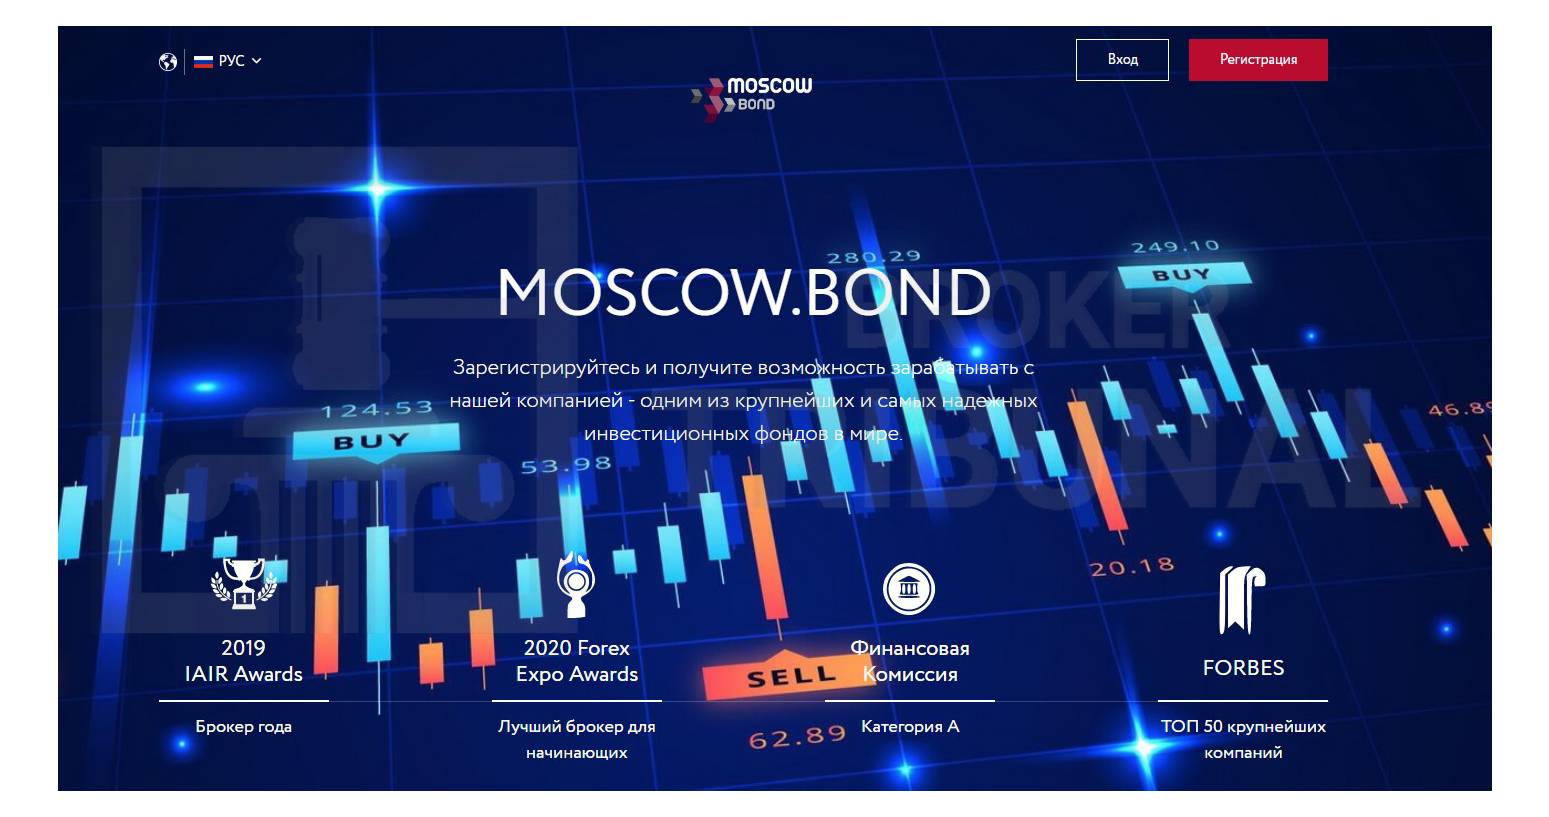 Moscow Bond